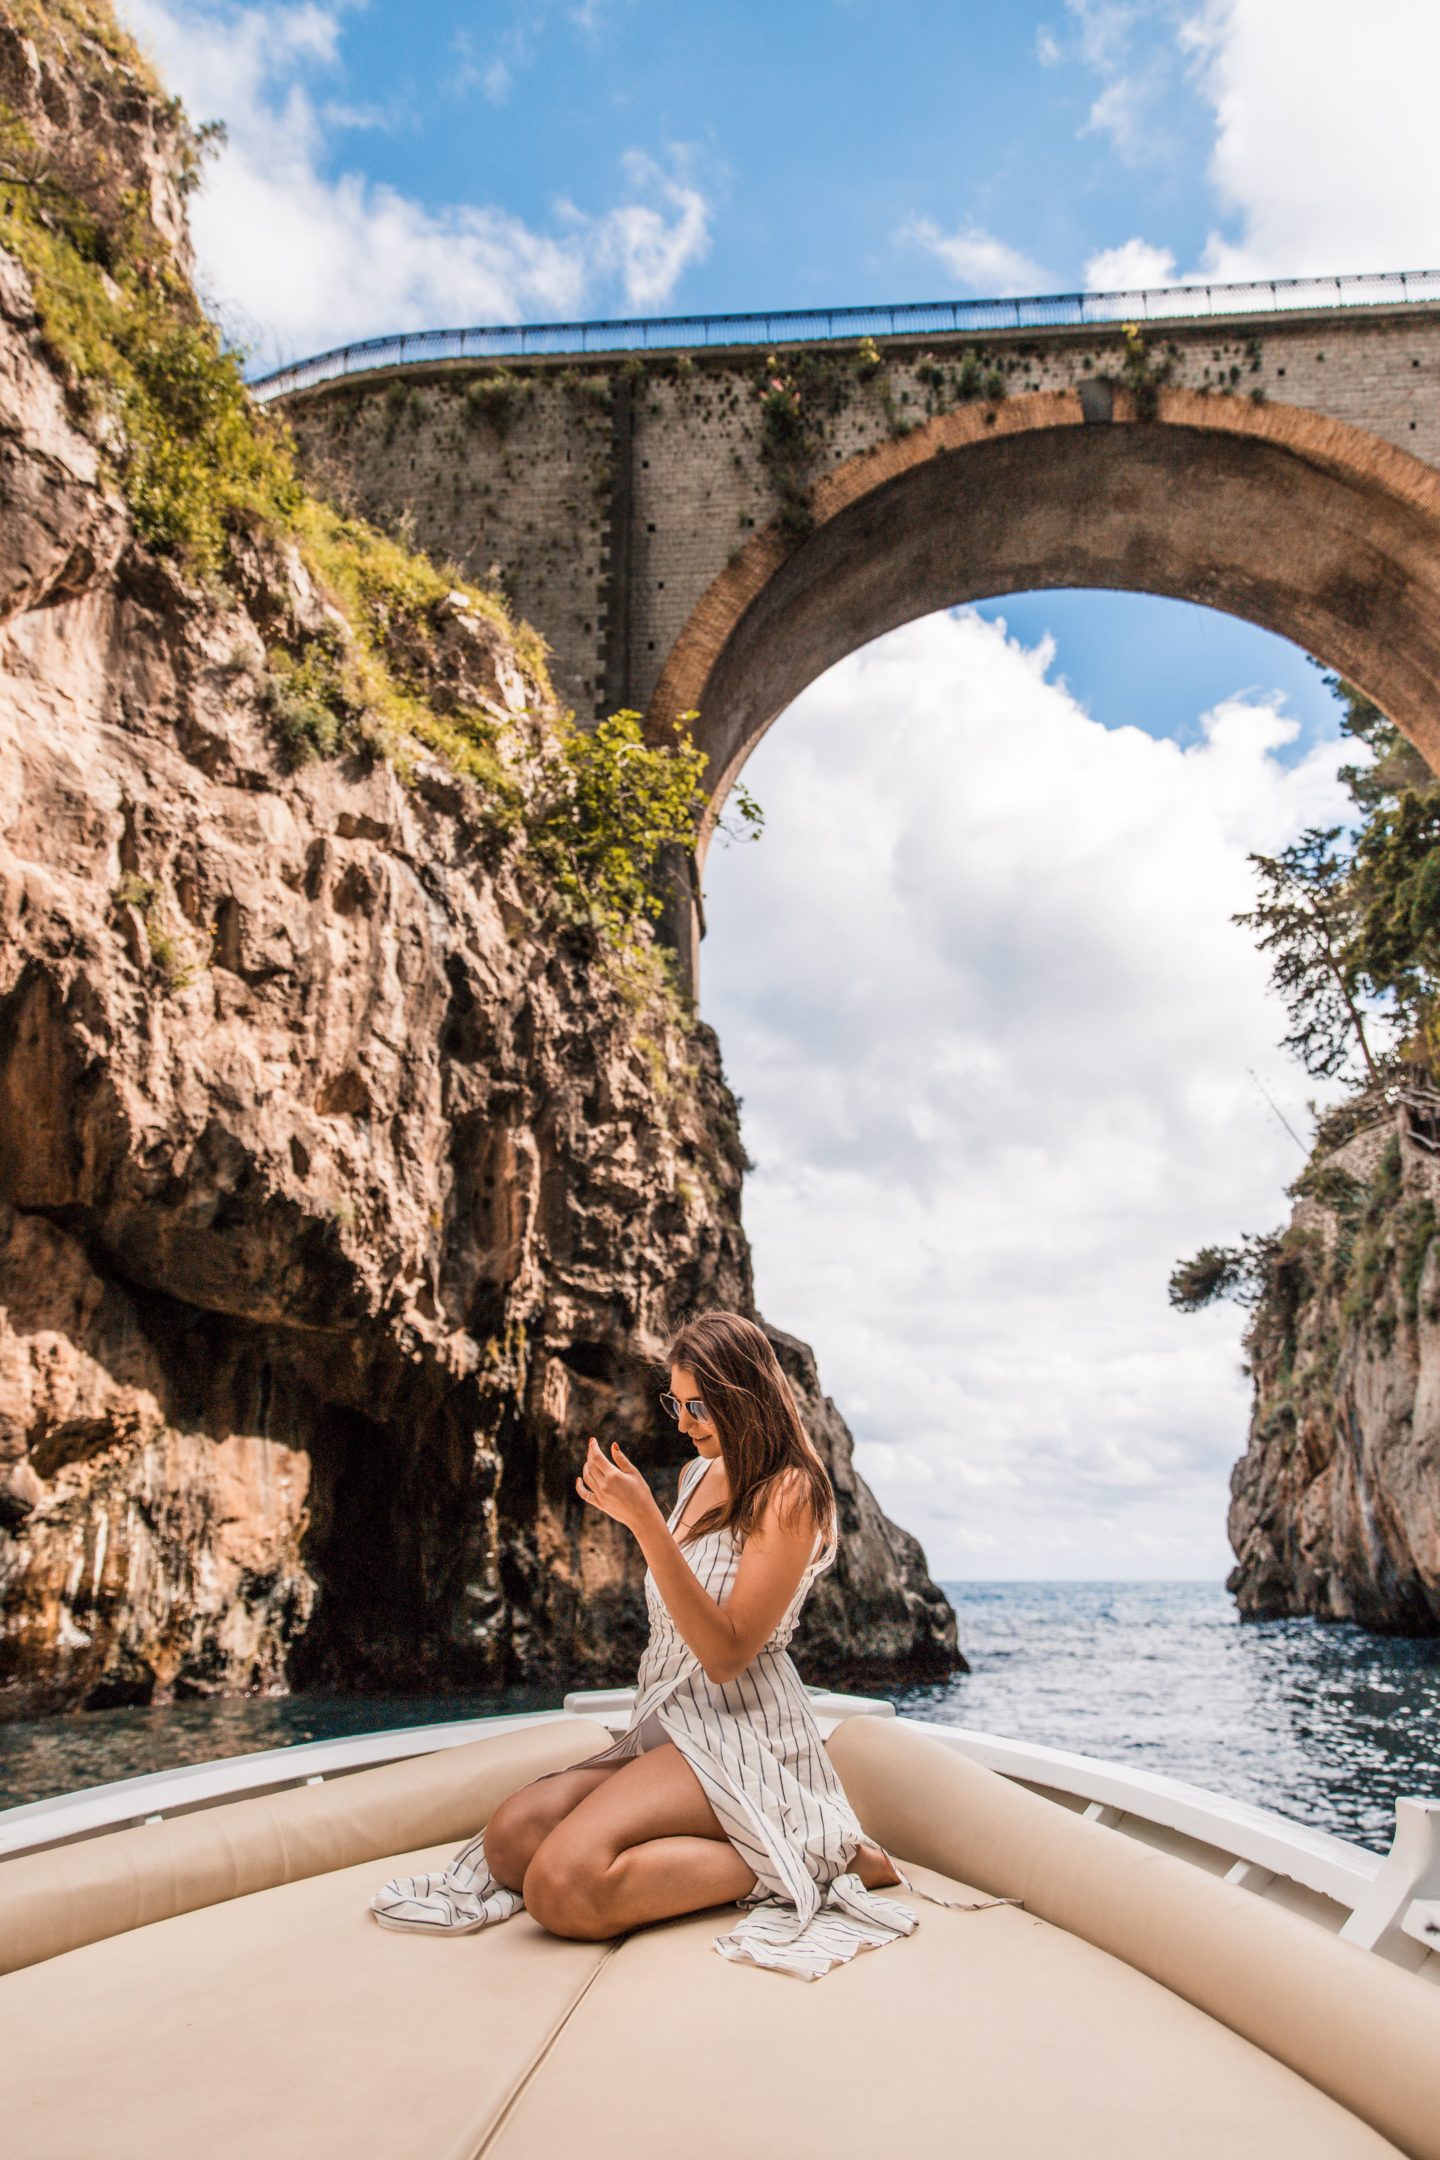 The Best Positano Instagram Shots | 12 Beautiful Shots You Can't Miss: Fiordo di Furore 